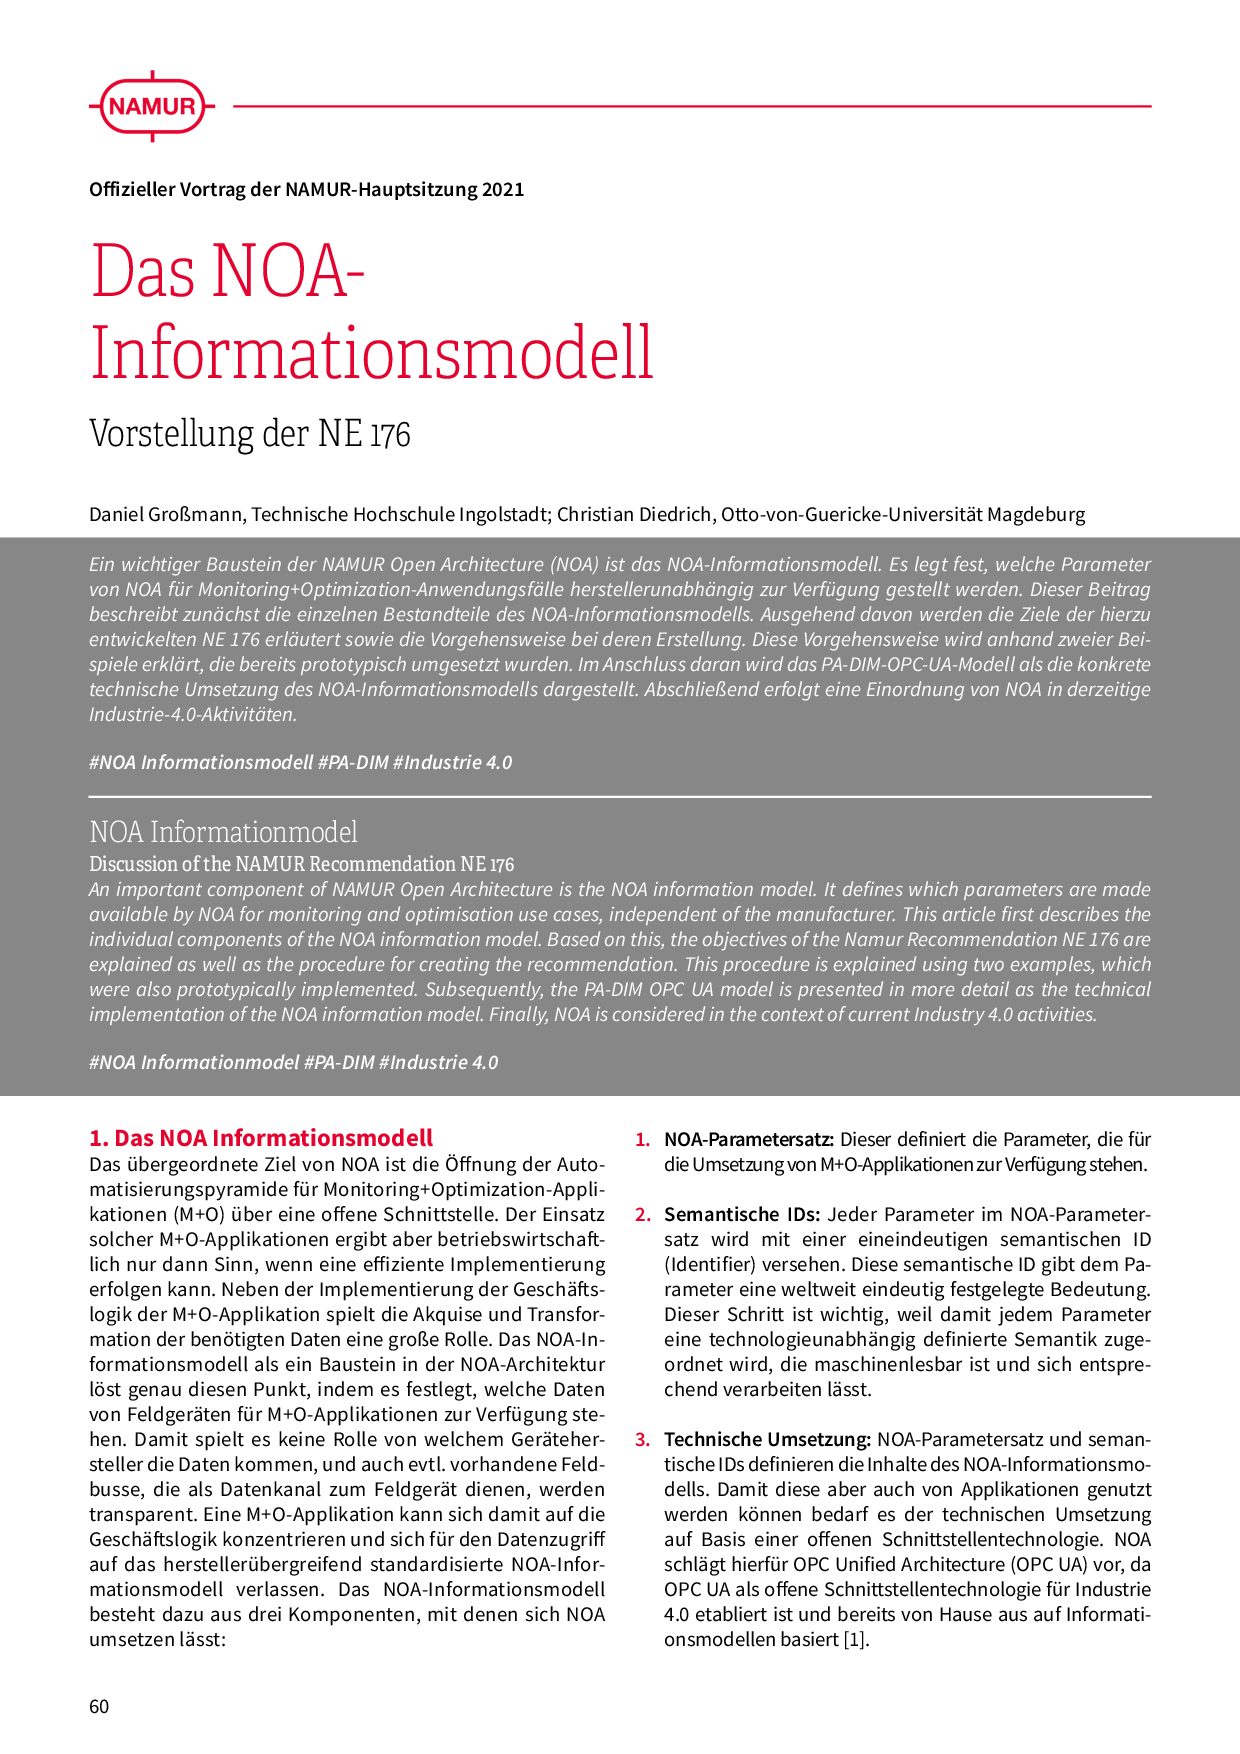 Das NOA-Informationsmodell